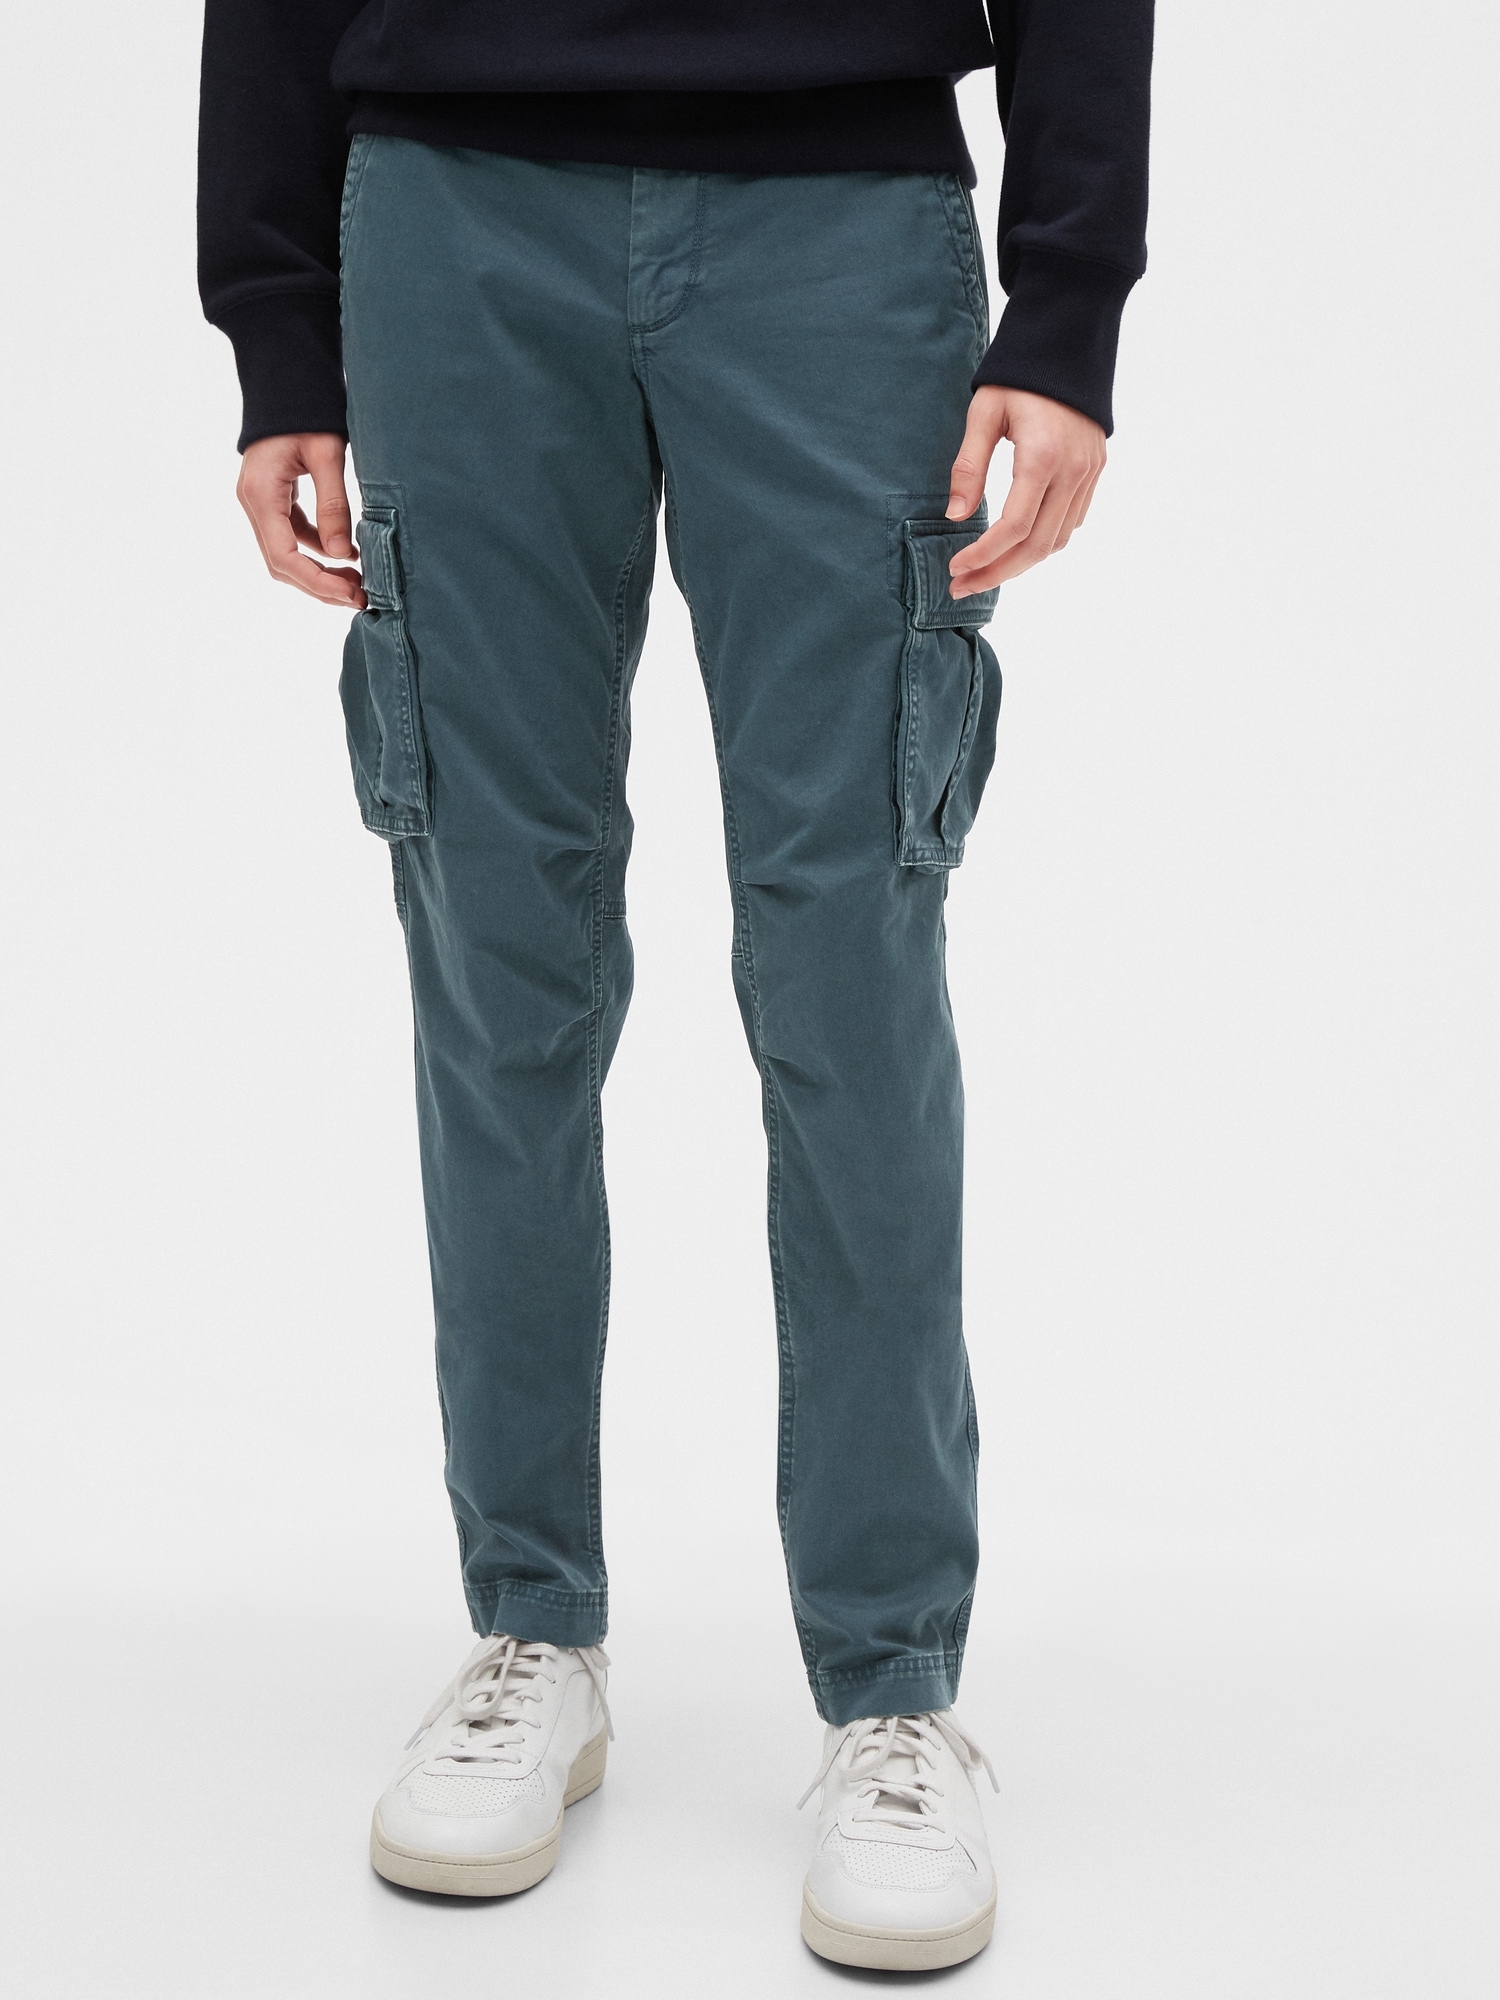 gap green cargo pants